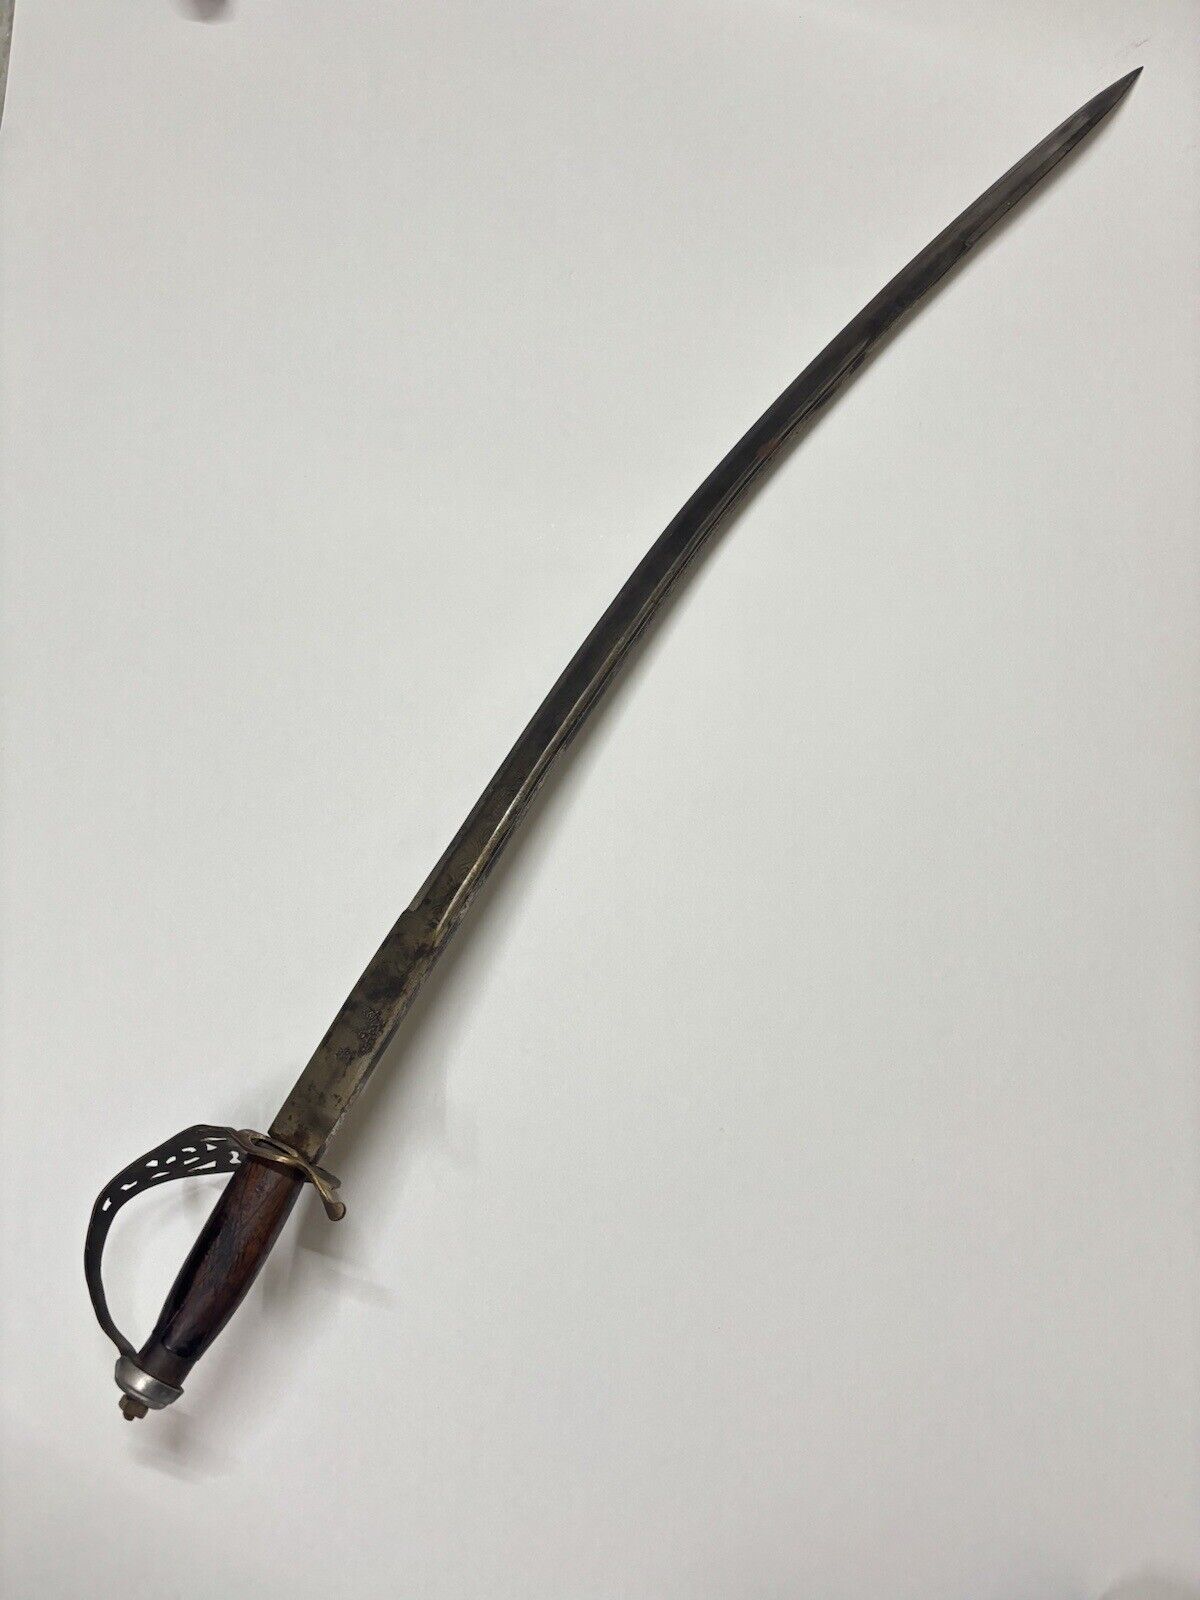 Saber Sword Antique Vintage Us Civil War Old Rare Collectible 36'